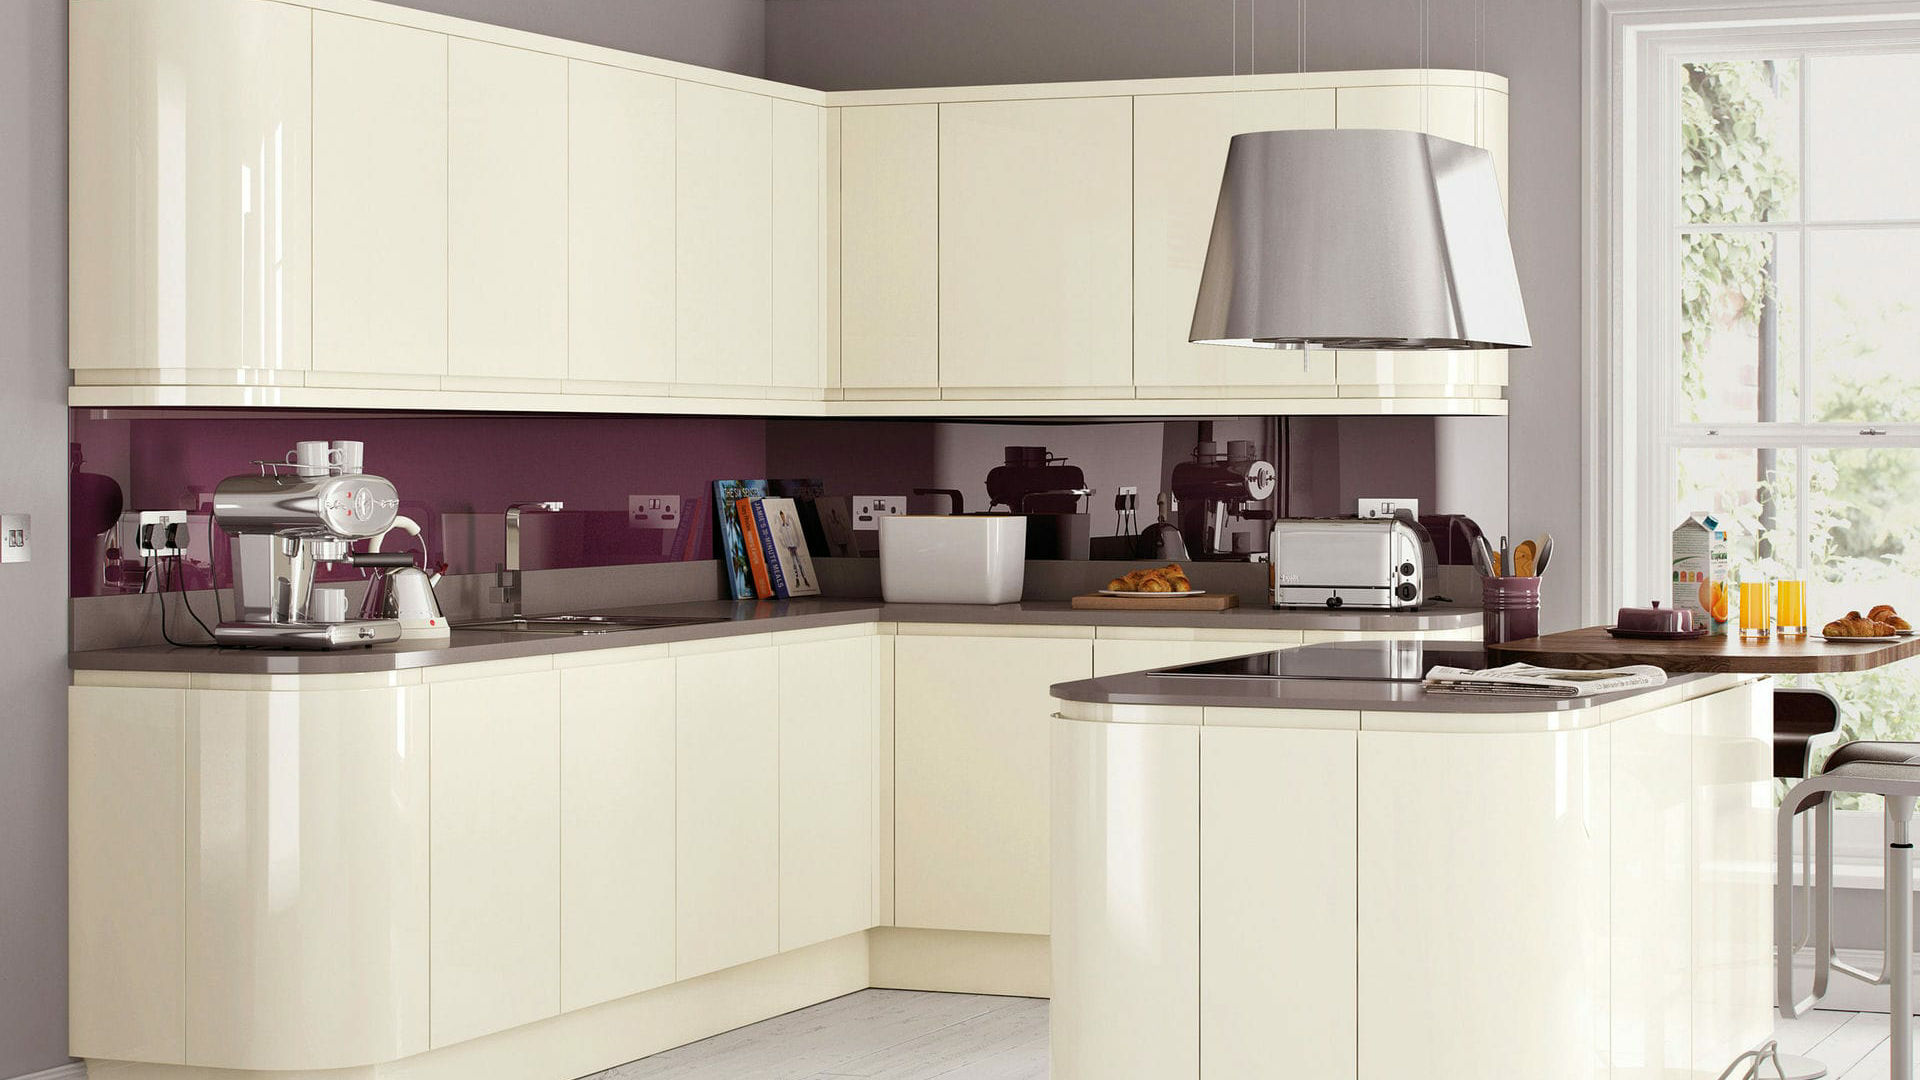 Sleek handleless high gloss cream kitchen offering a minimalist and modern look to enhance spaciousness